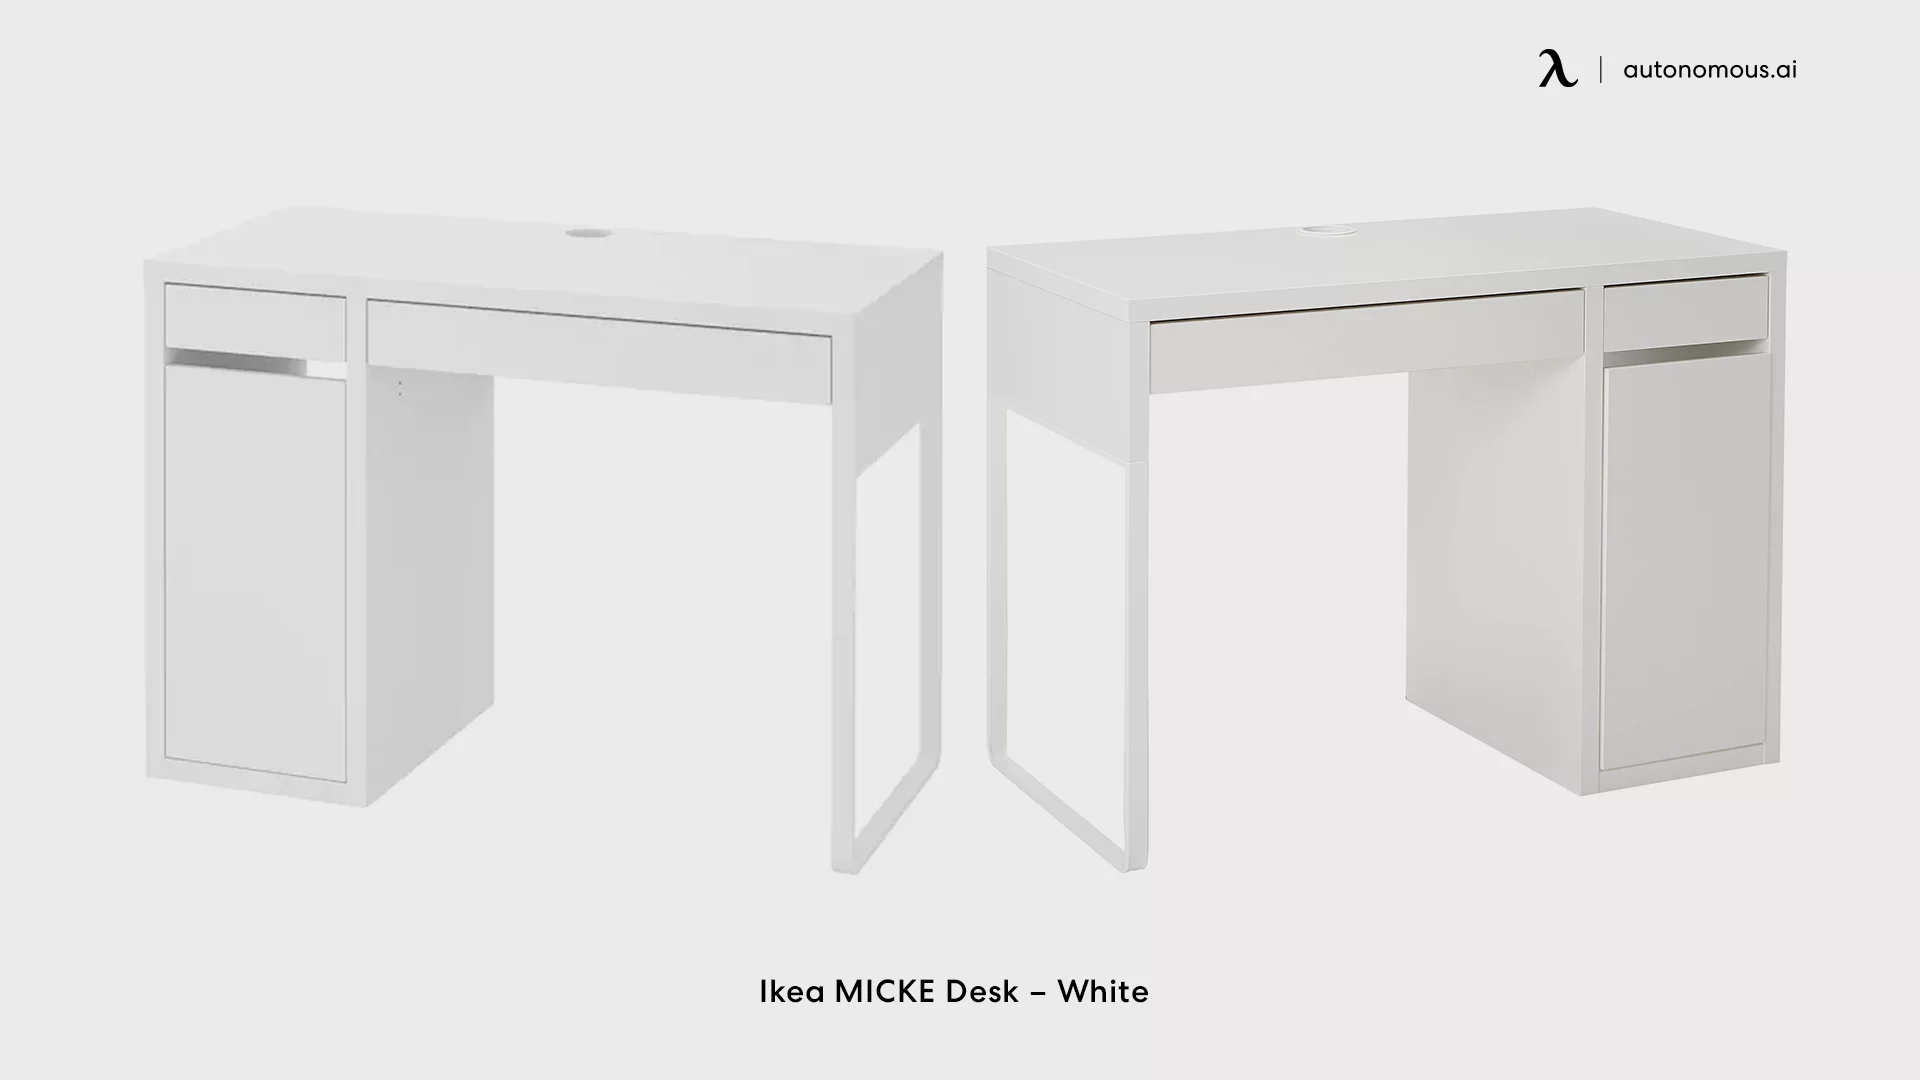 Ikea MICKE Desk – white desk with drawers